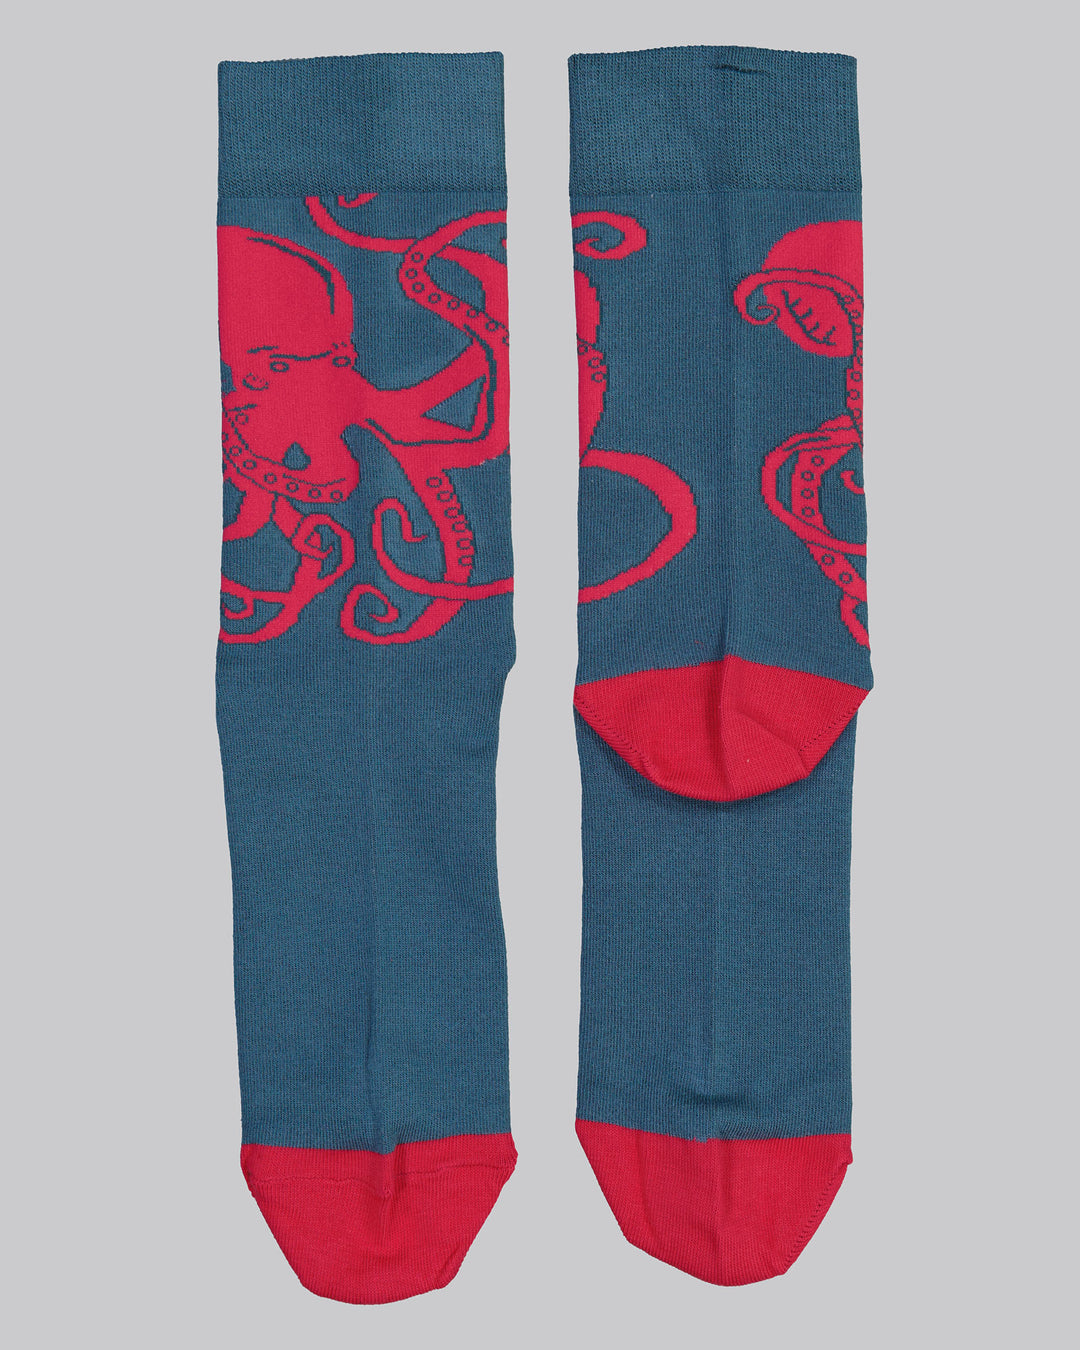 Socks Octopus Pink Flat - Woodstock Laundry